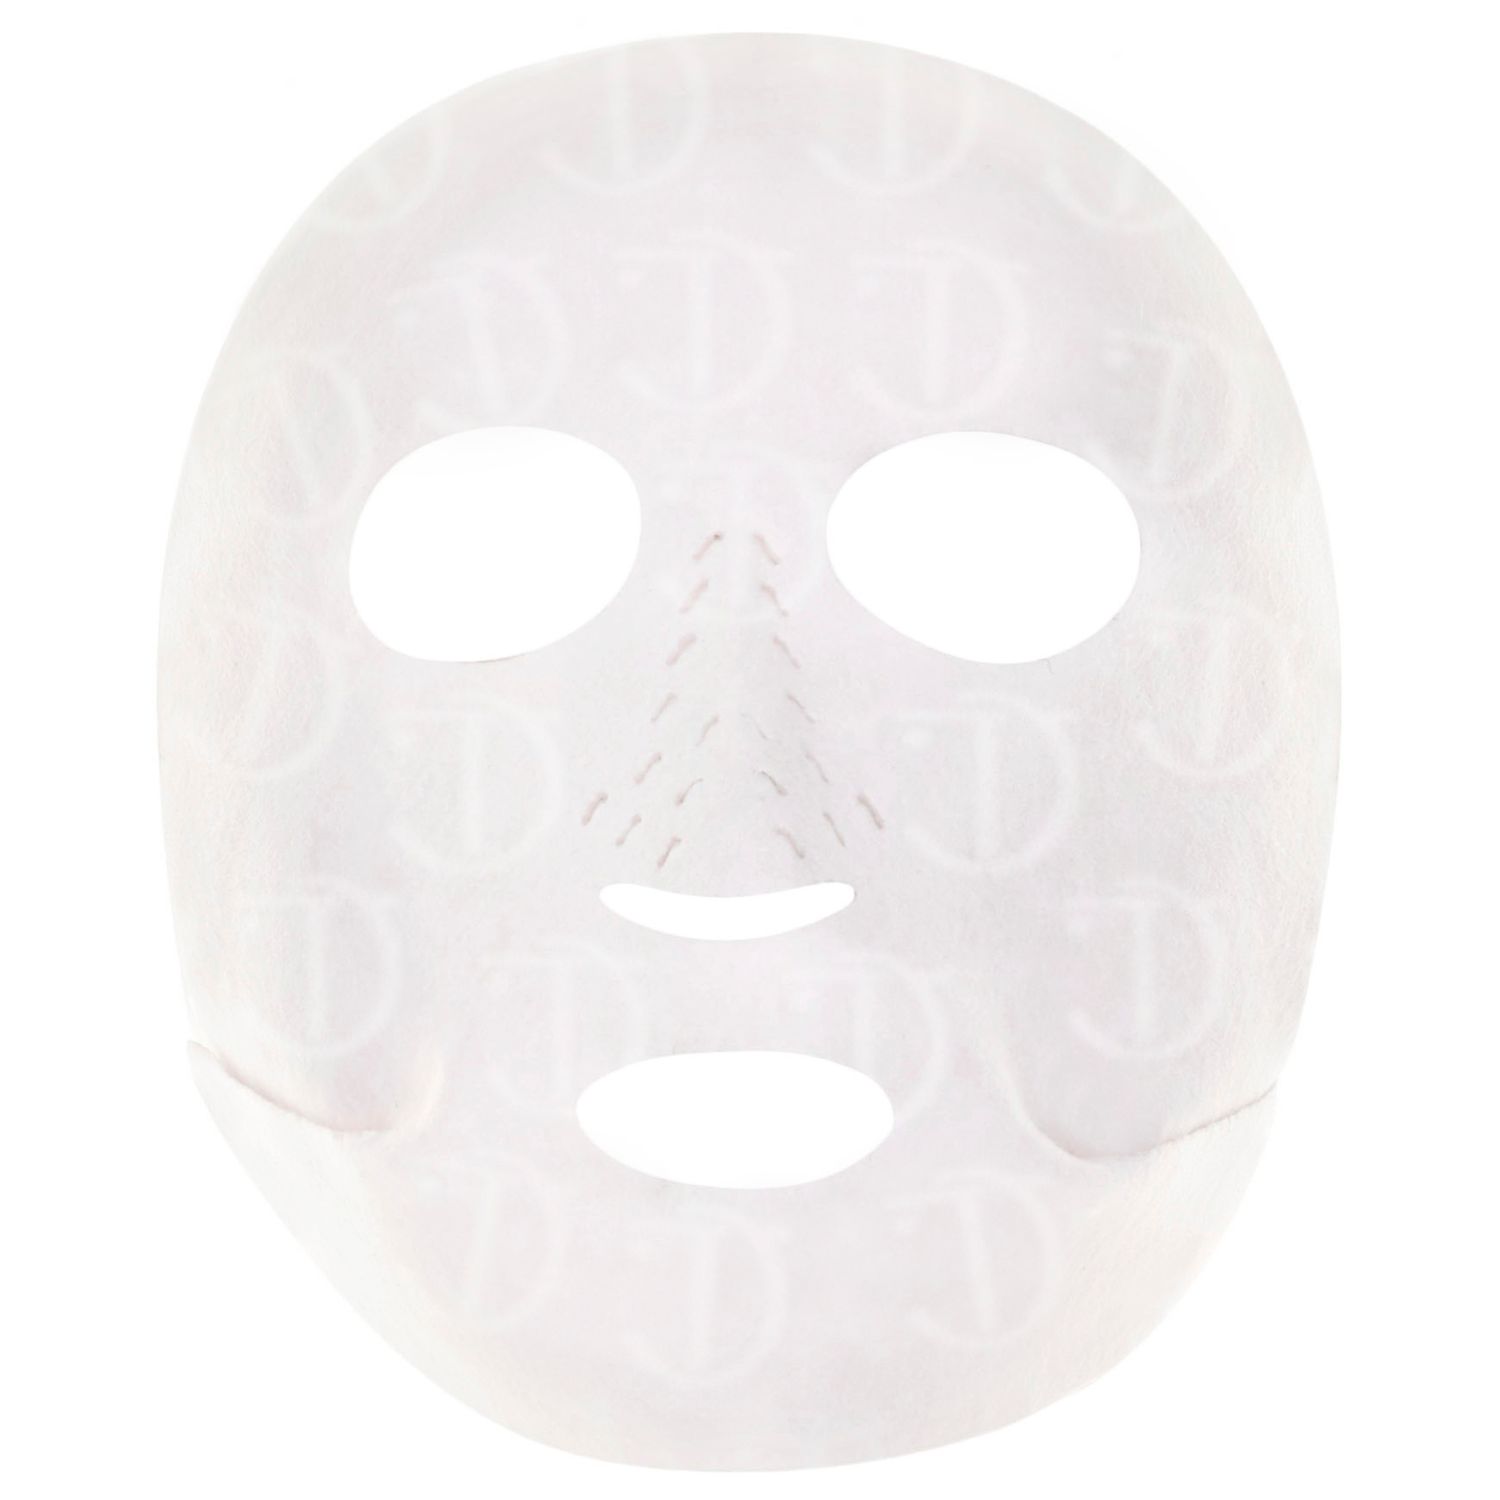 Charlotte Tilbury Instant Magic Facial Dry Sheet Mask, x 1 6